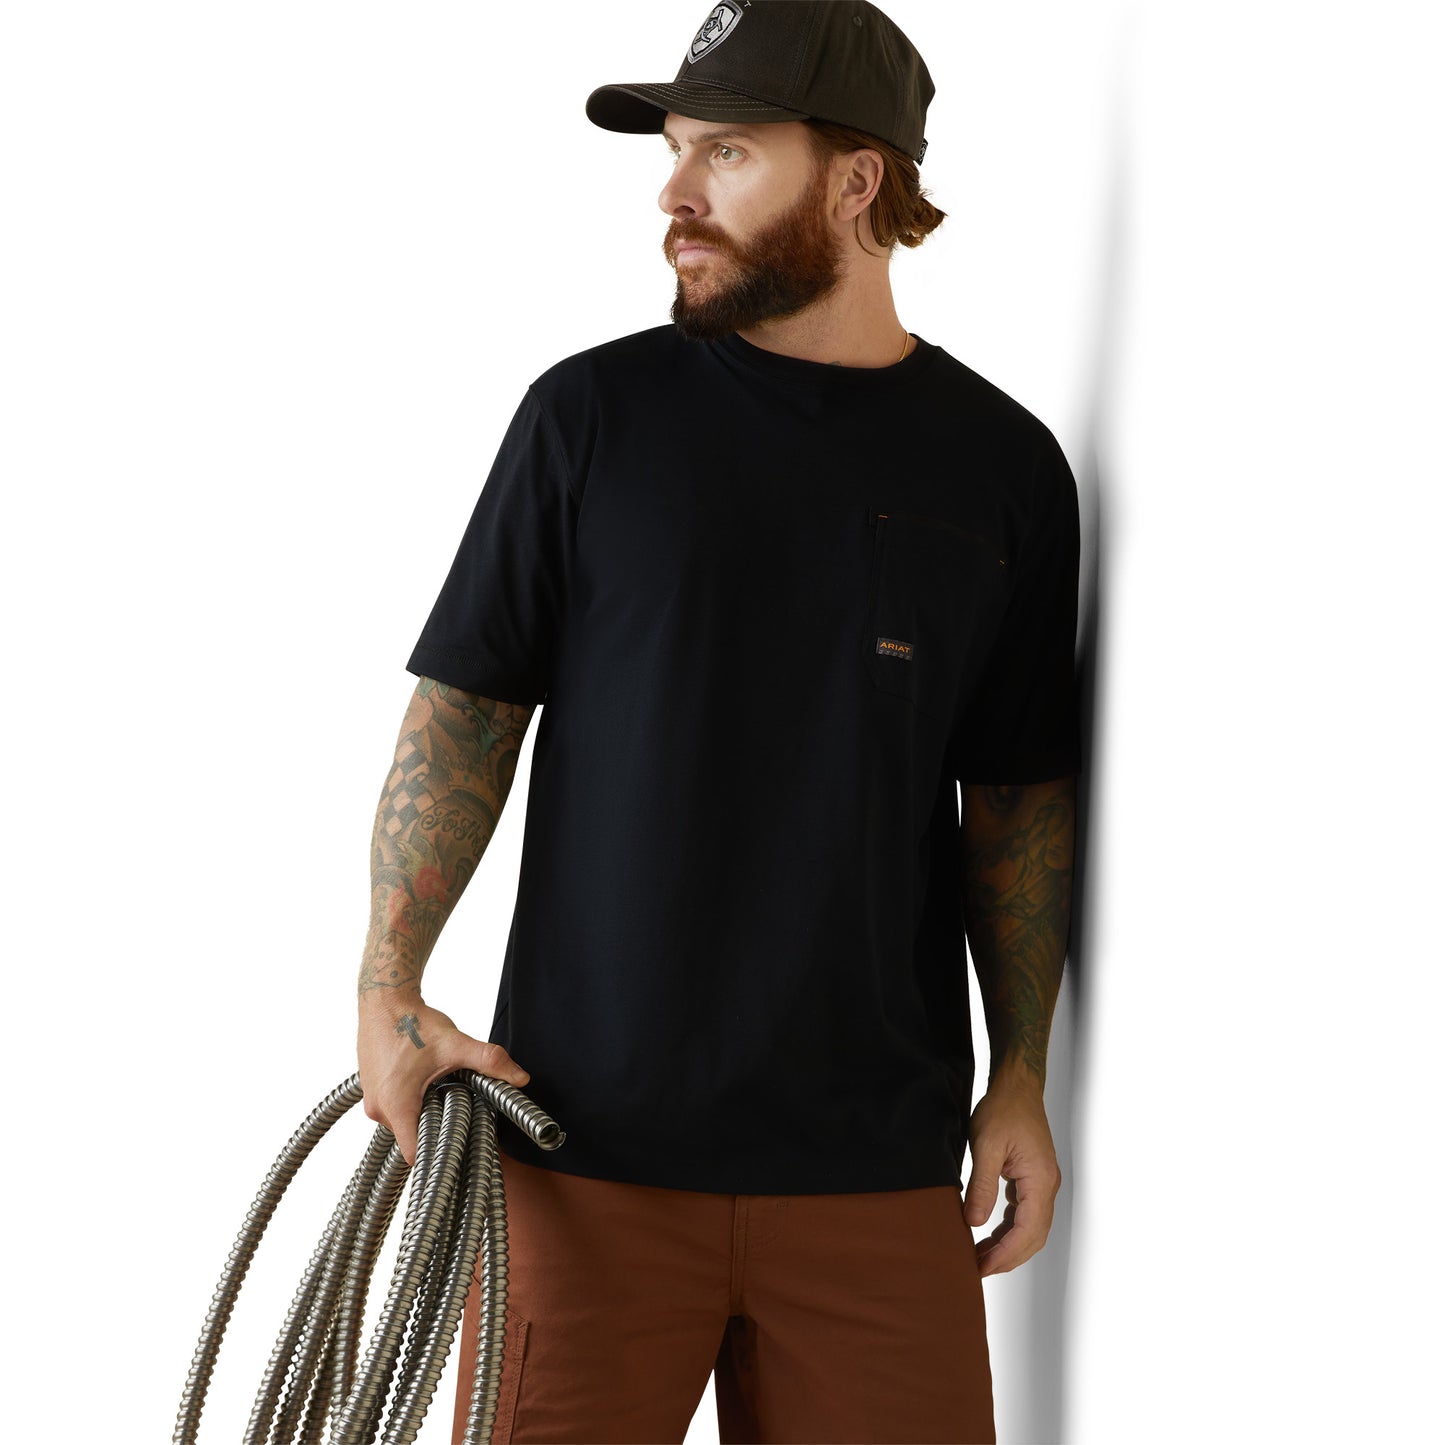 Ariat® Men's Rebar Workman Buzz Saw Black Graphic T-Shirt 10043833